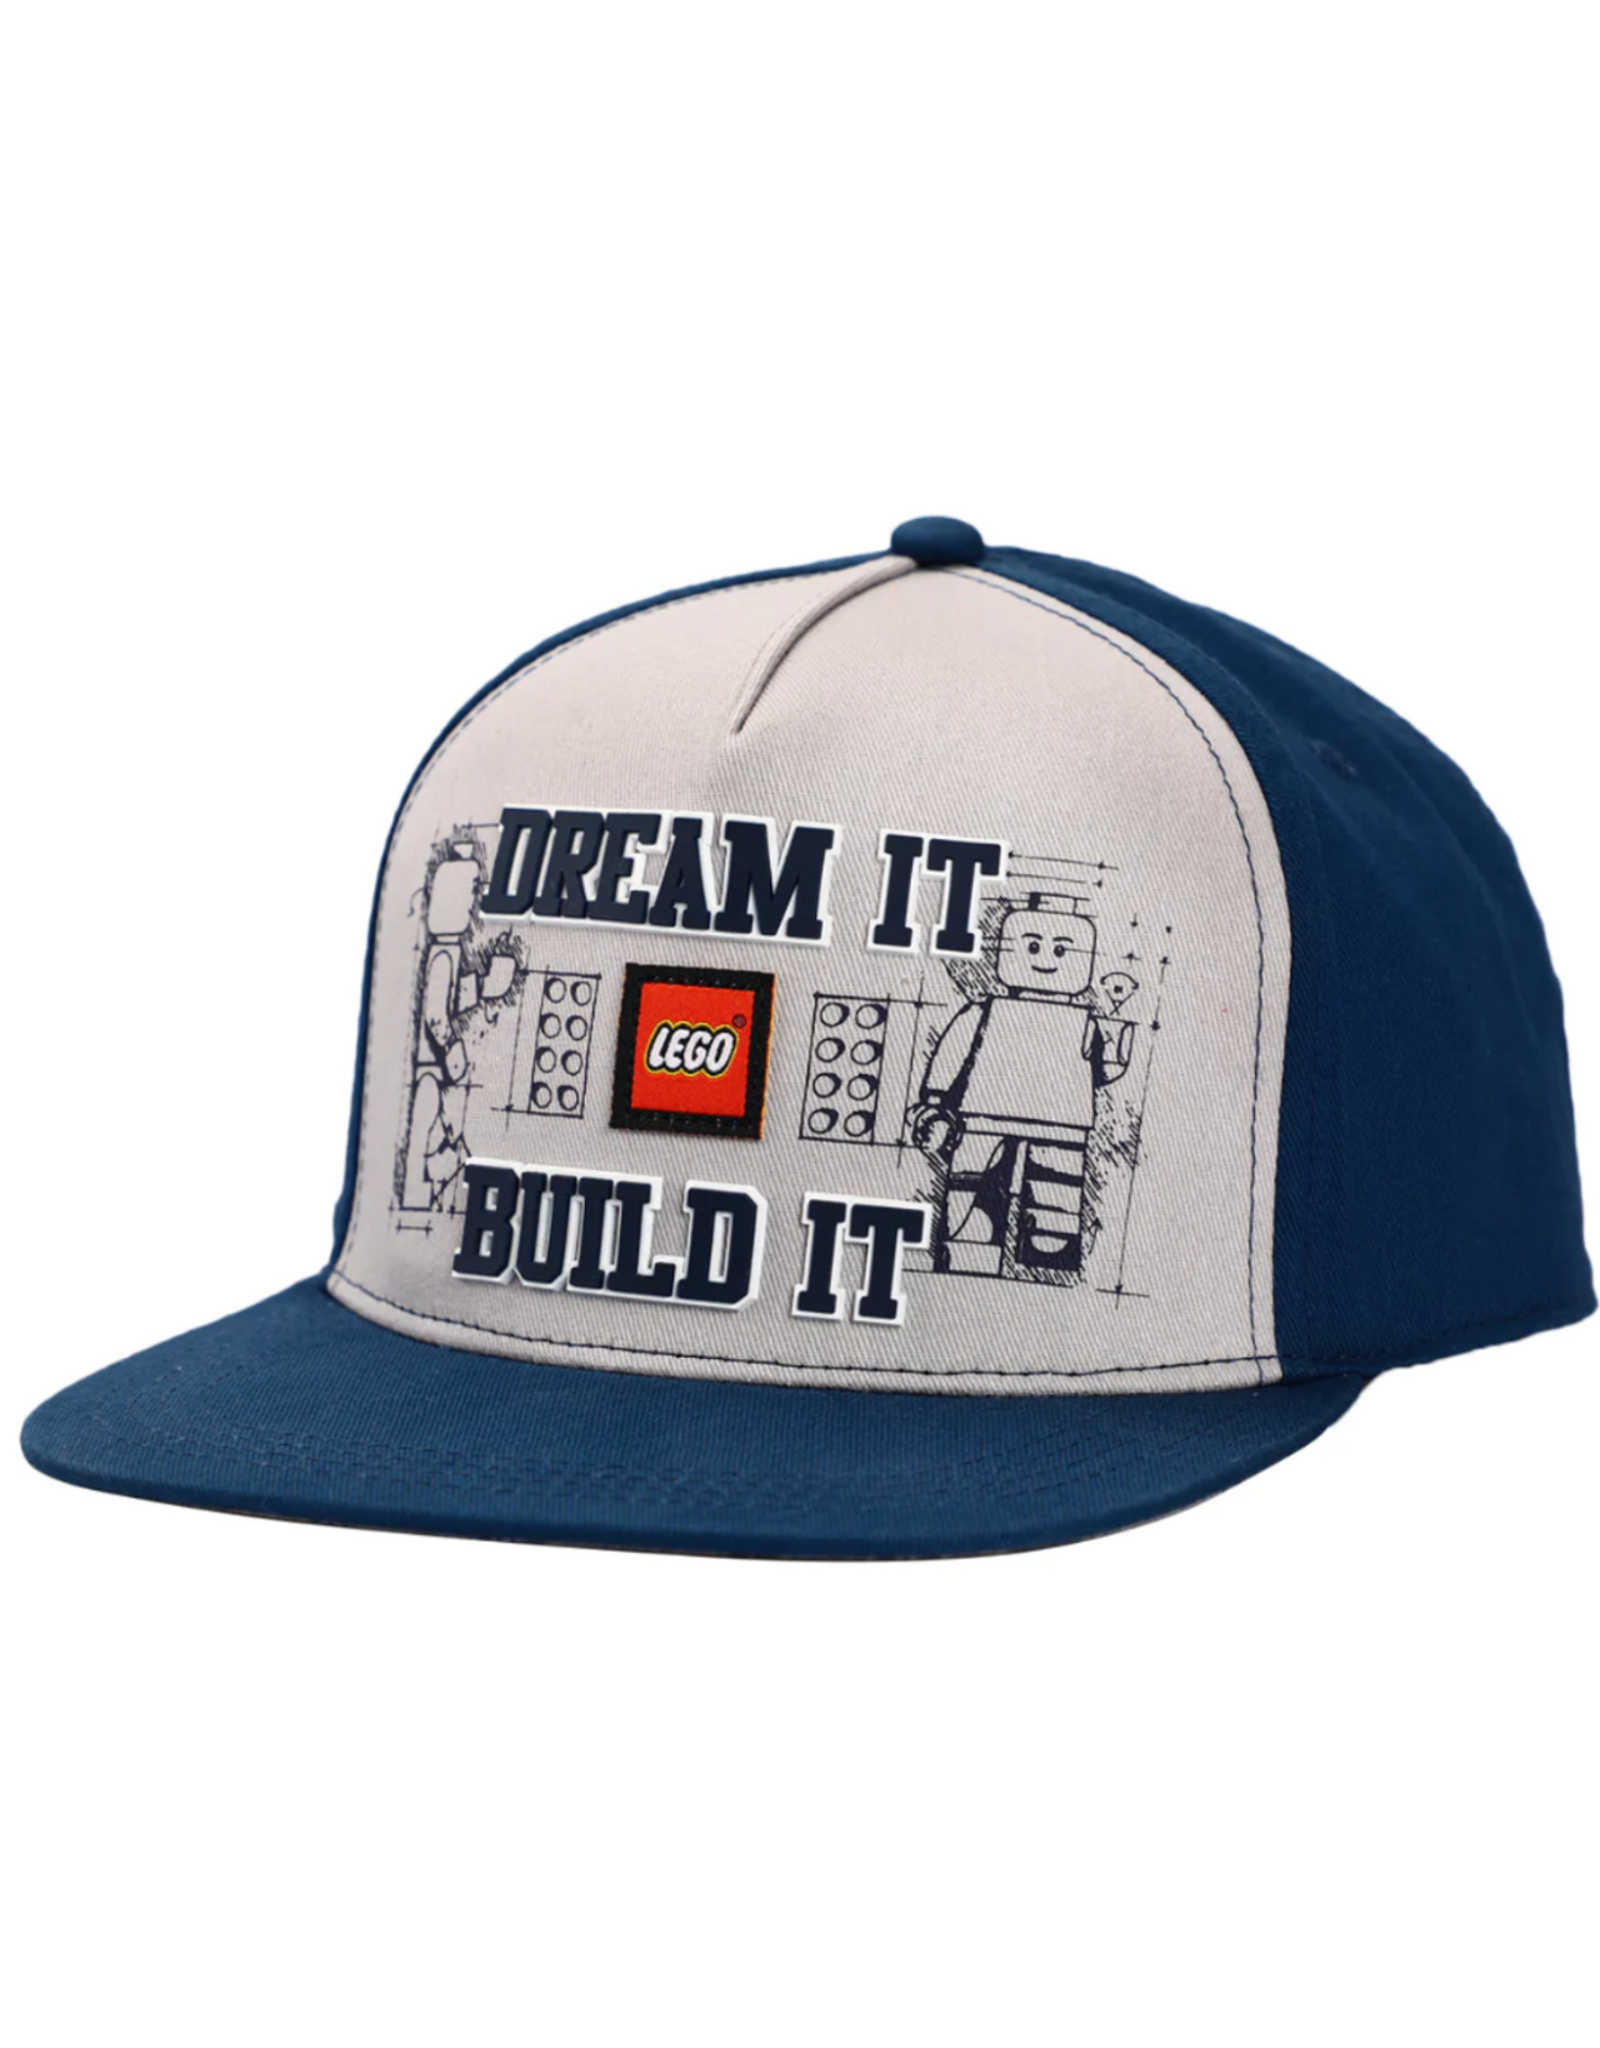 Lego Dream - Build It Youth Hat